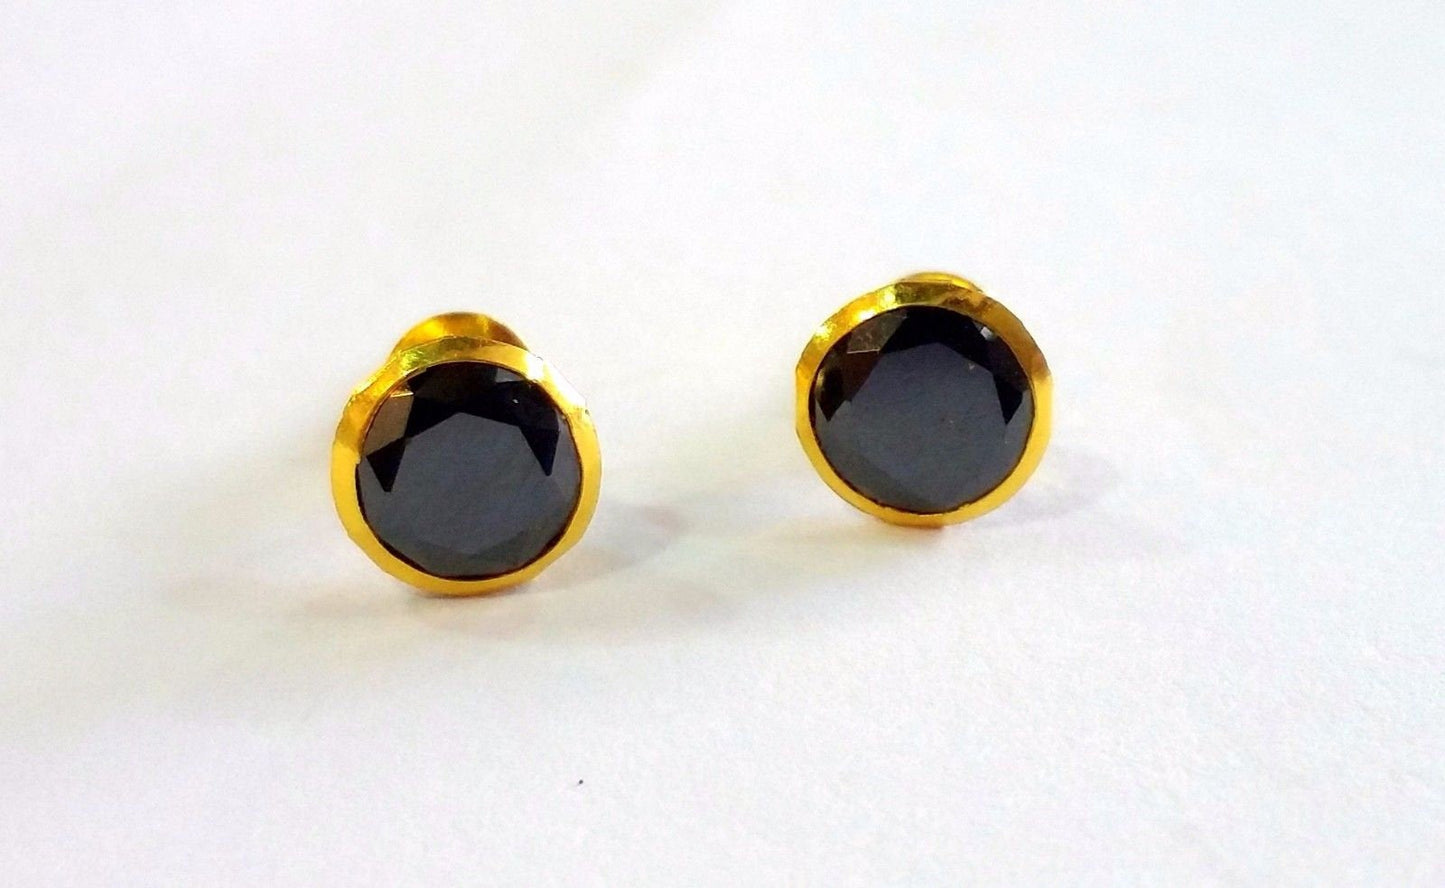 Genuine 18k yellow gold handmade fabulous black onyx stone excellent antique vintage design stud earrings pair unisex jewelry - TRIBAL ORNAMENTS